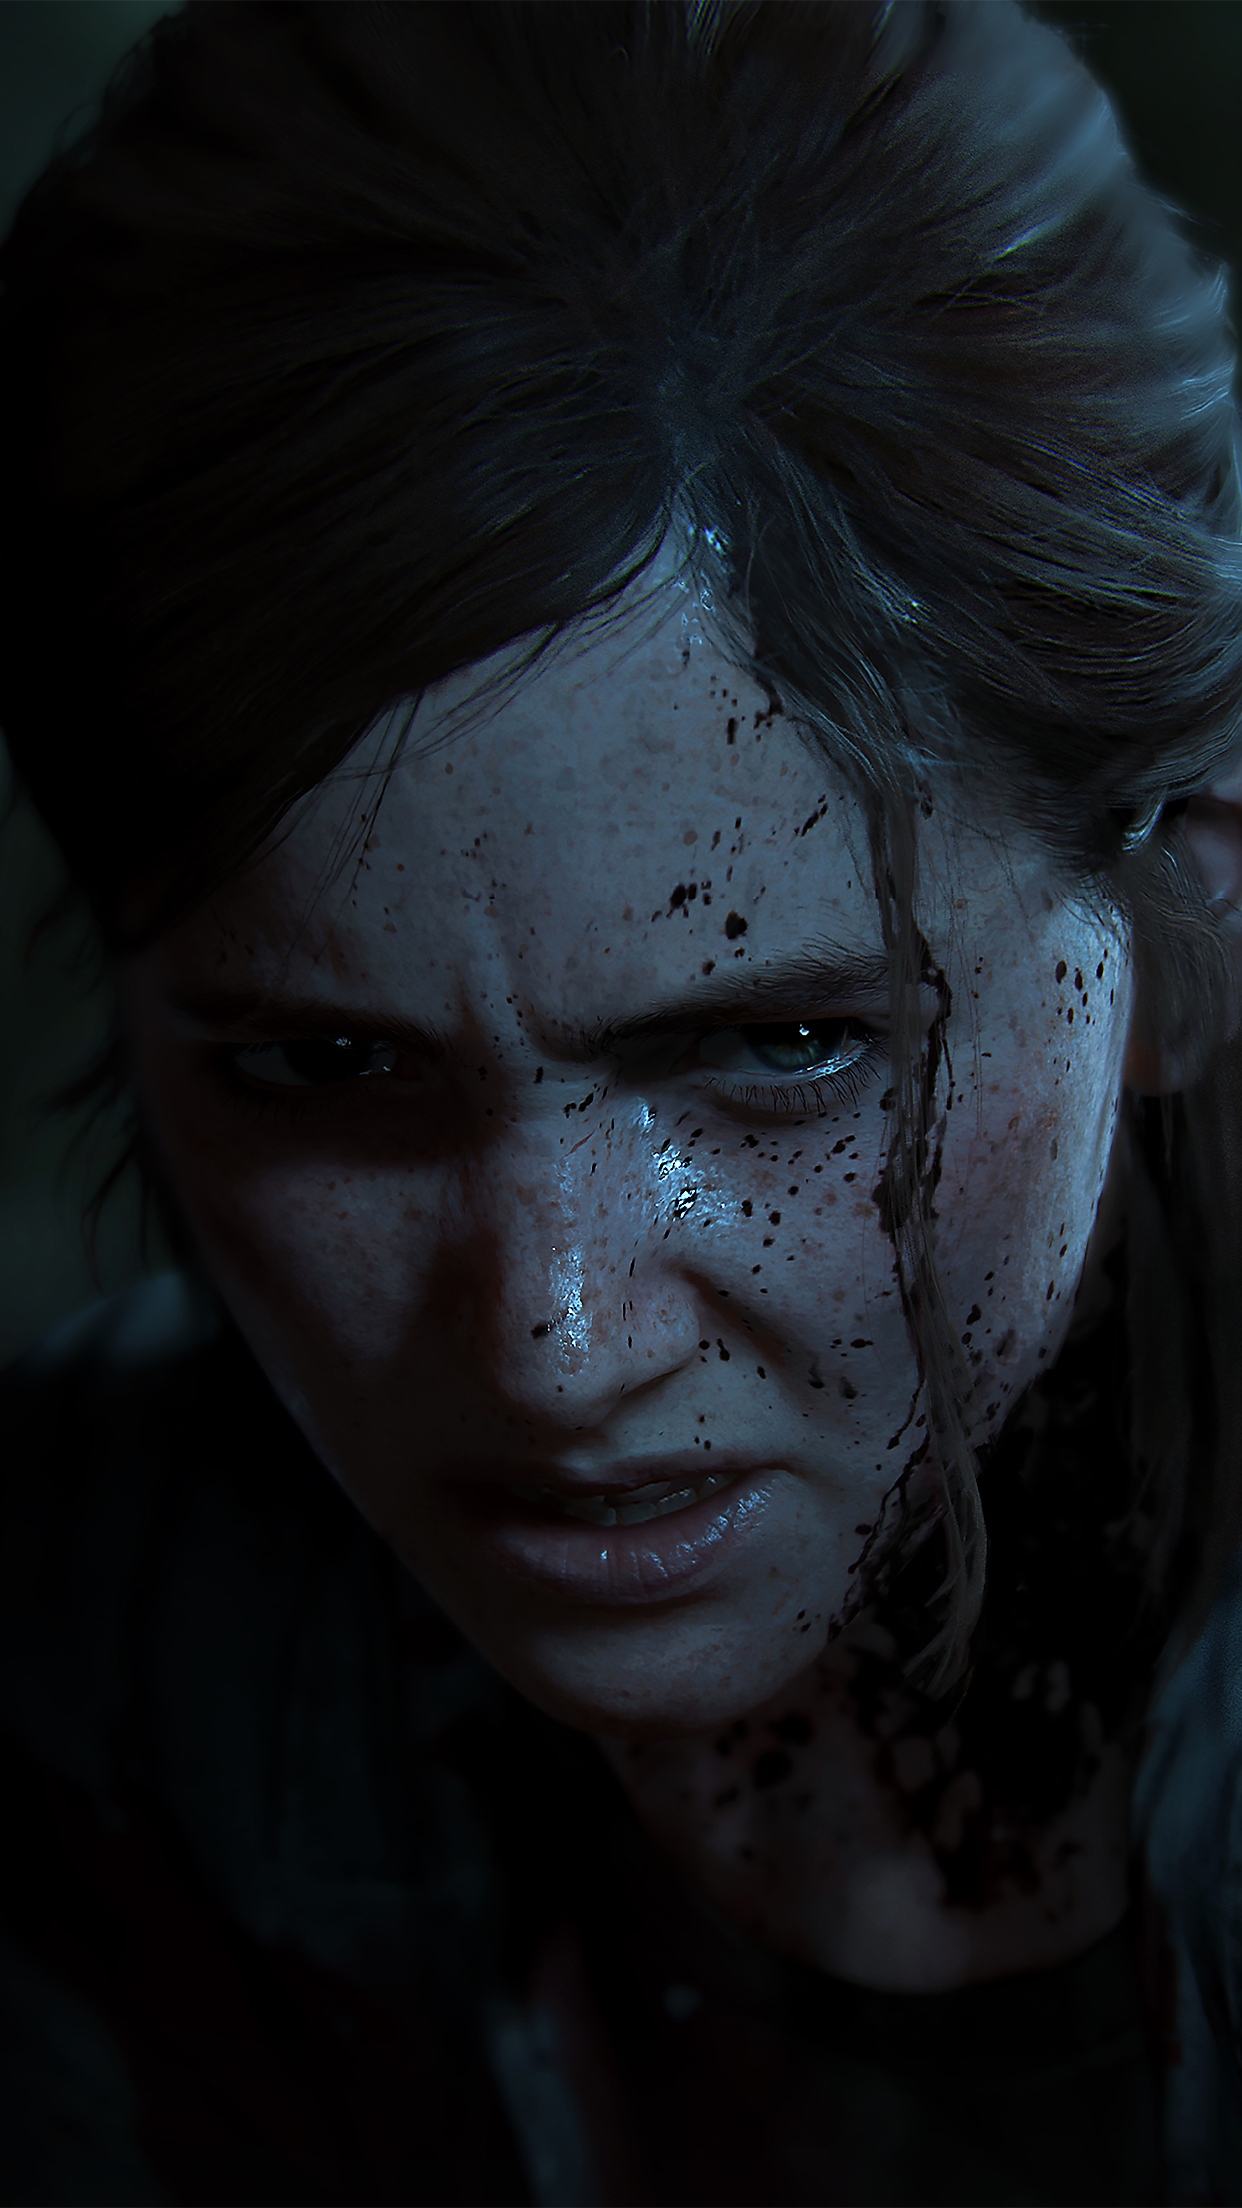 The Last of Us Part II konceptualna glavna ilustracija - iPhone 8 Plus